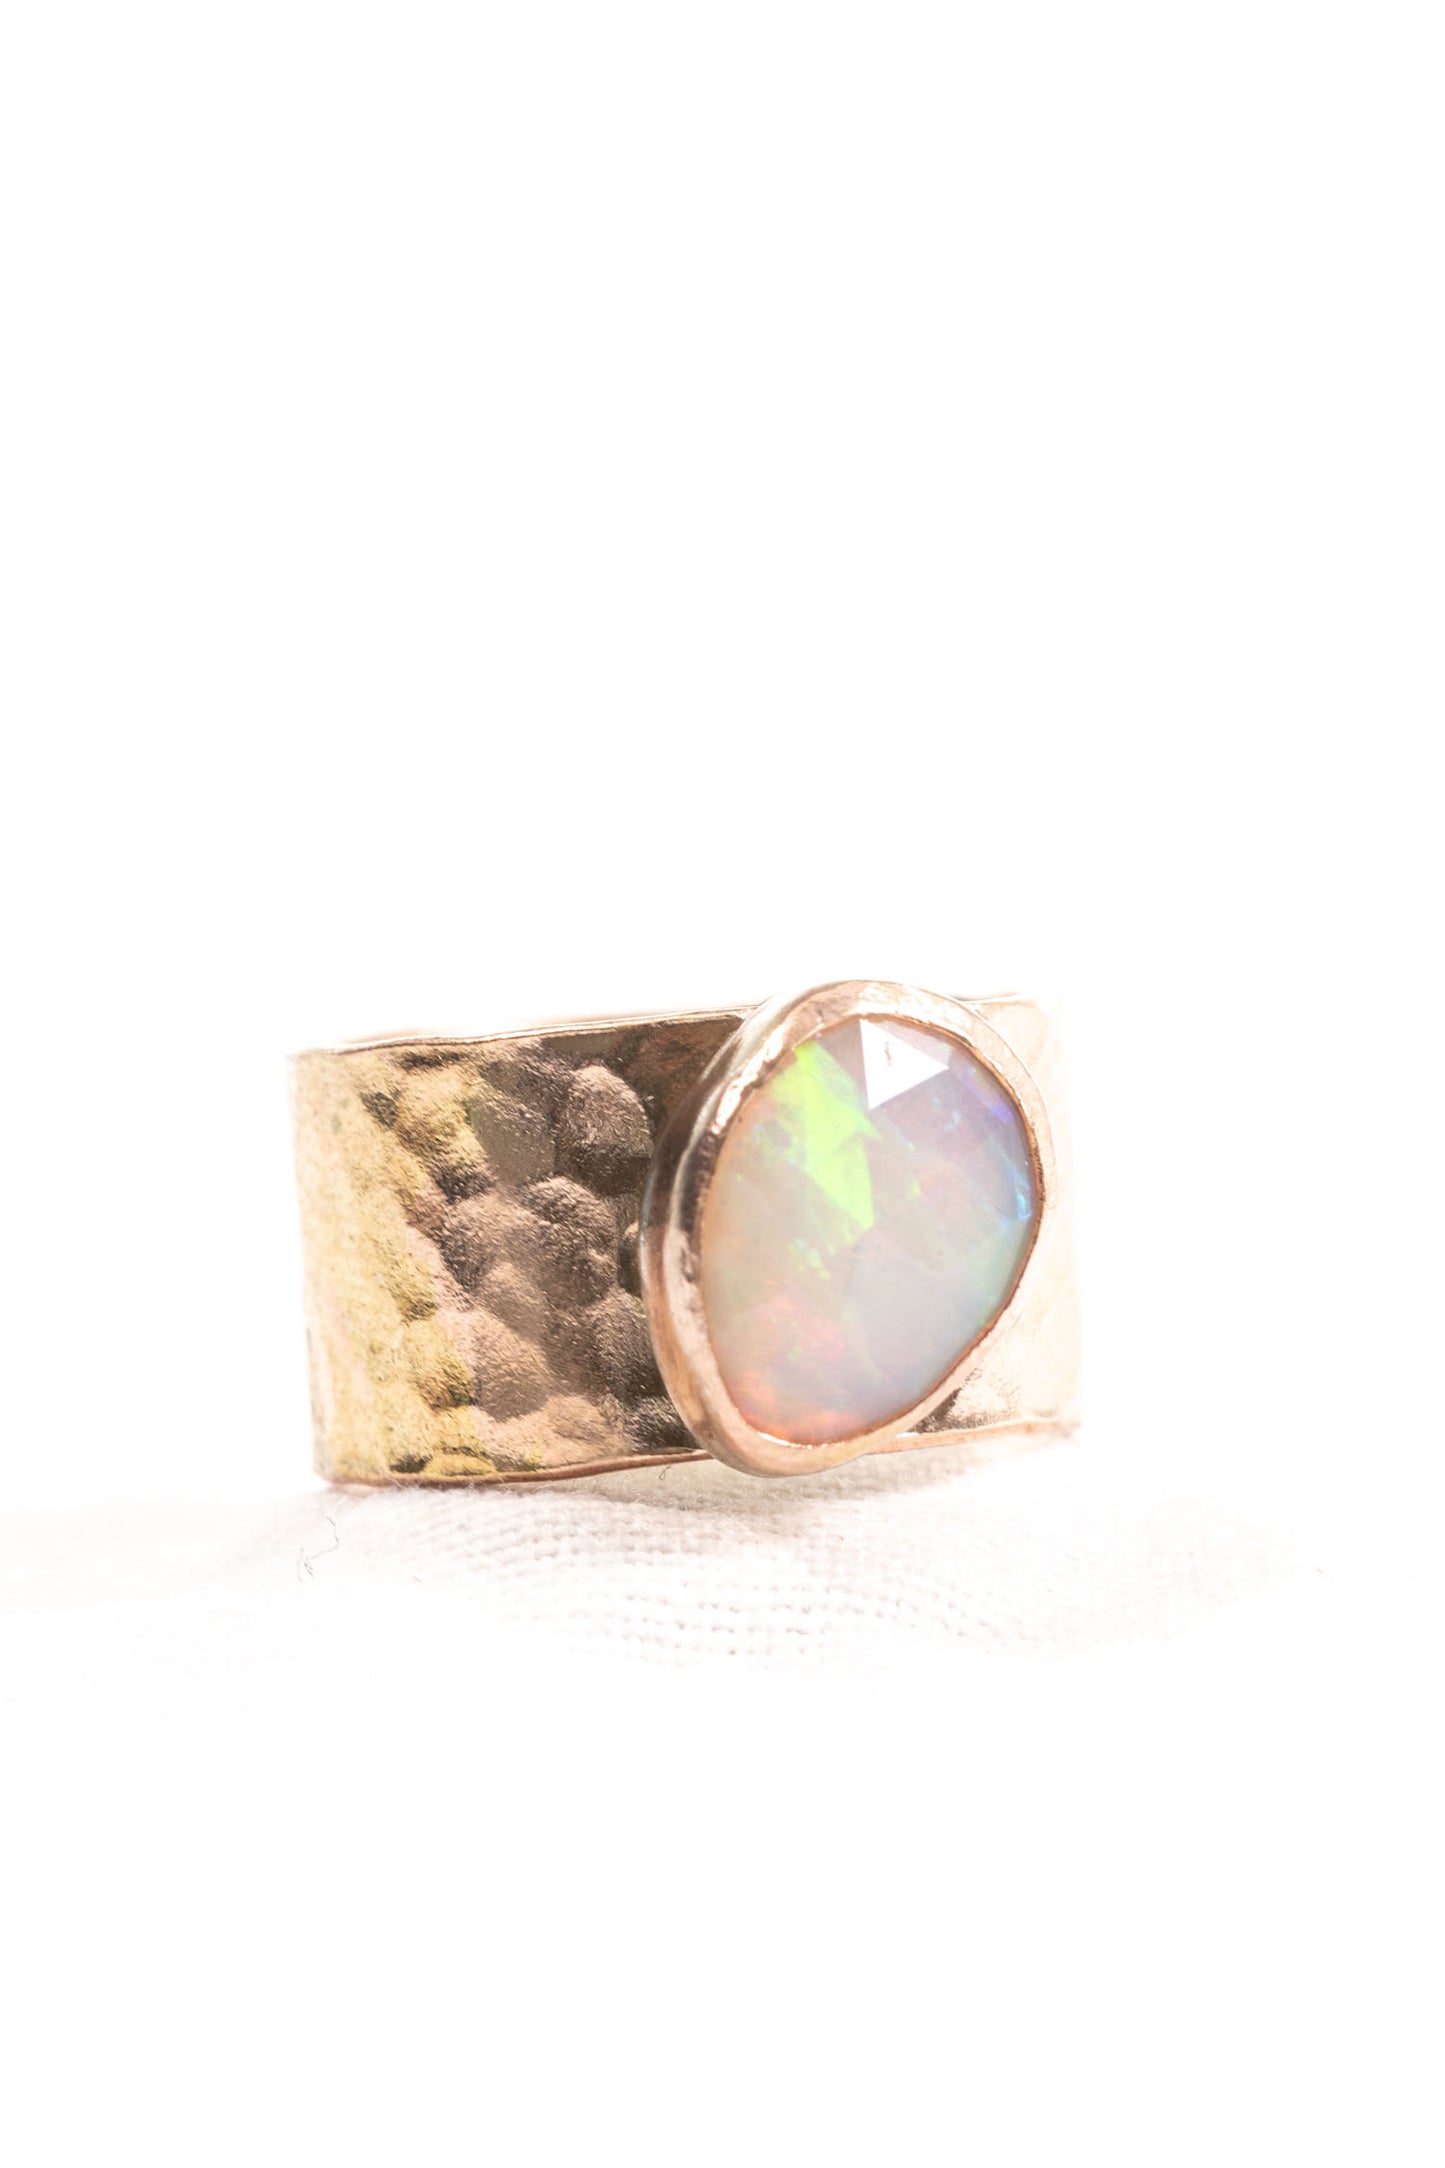 Firey opal gold filled ring